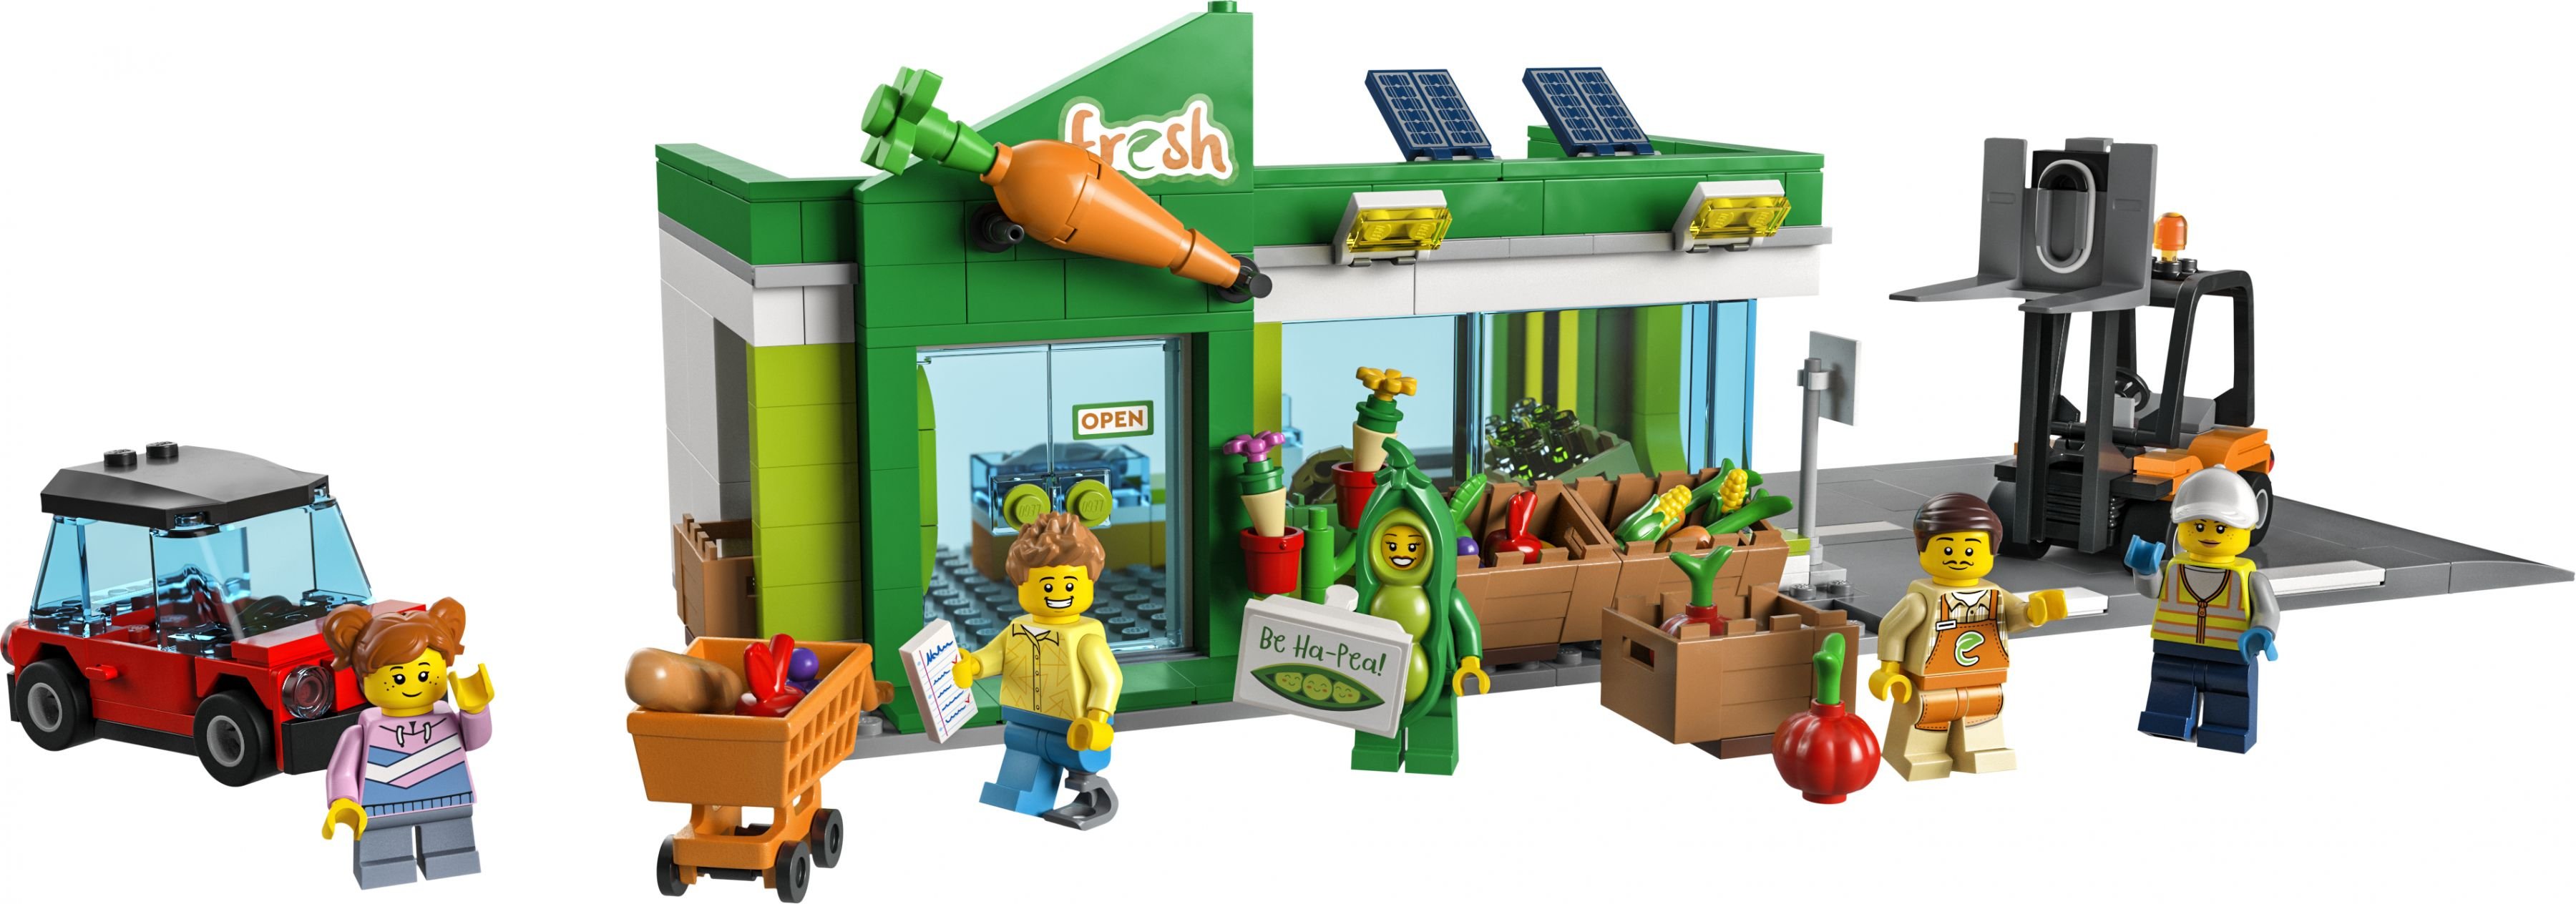 LEGO City 60347 Supermarkt